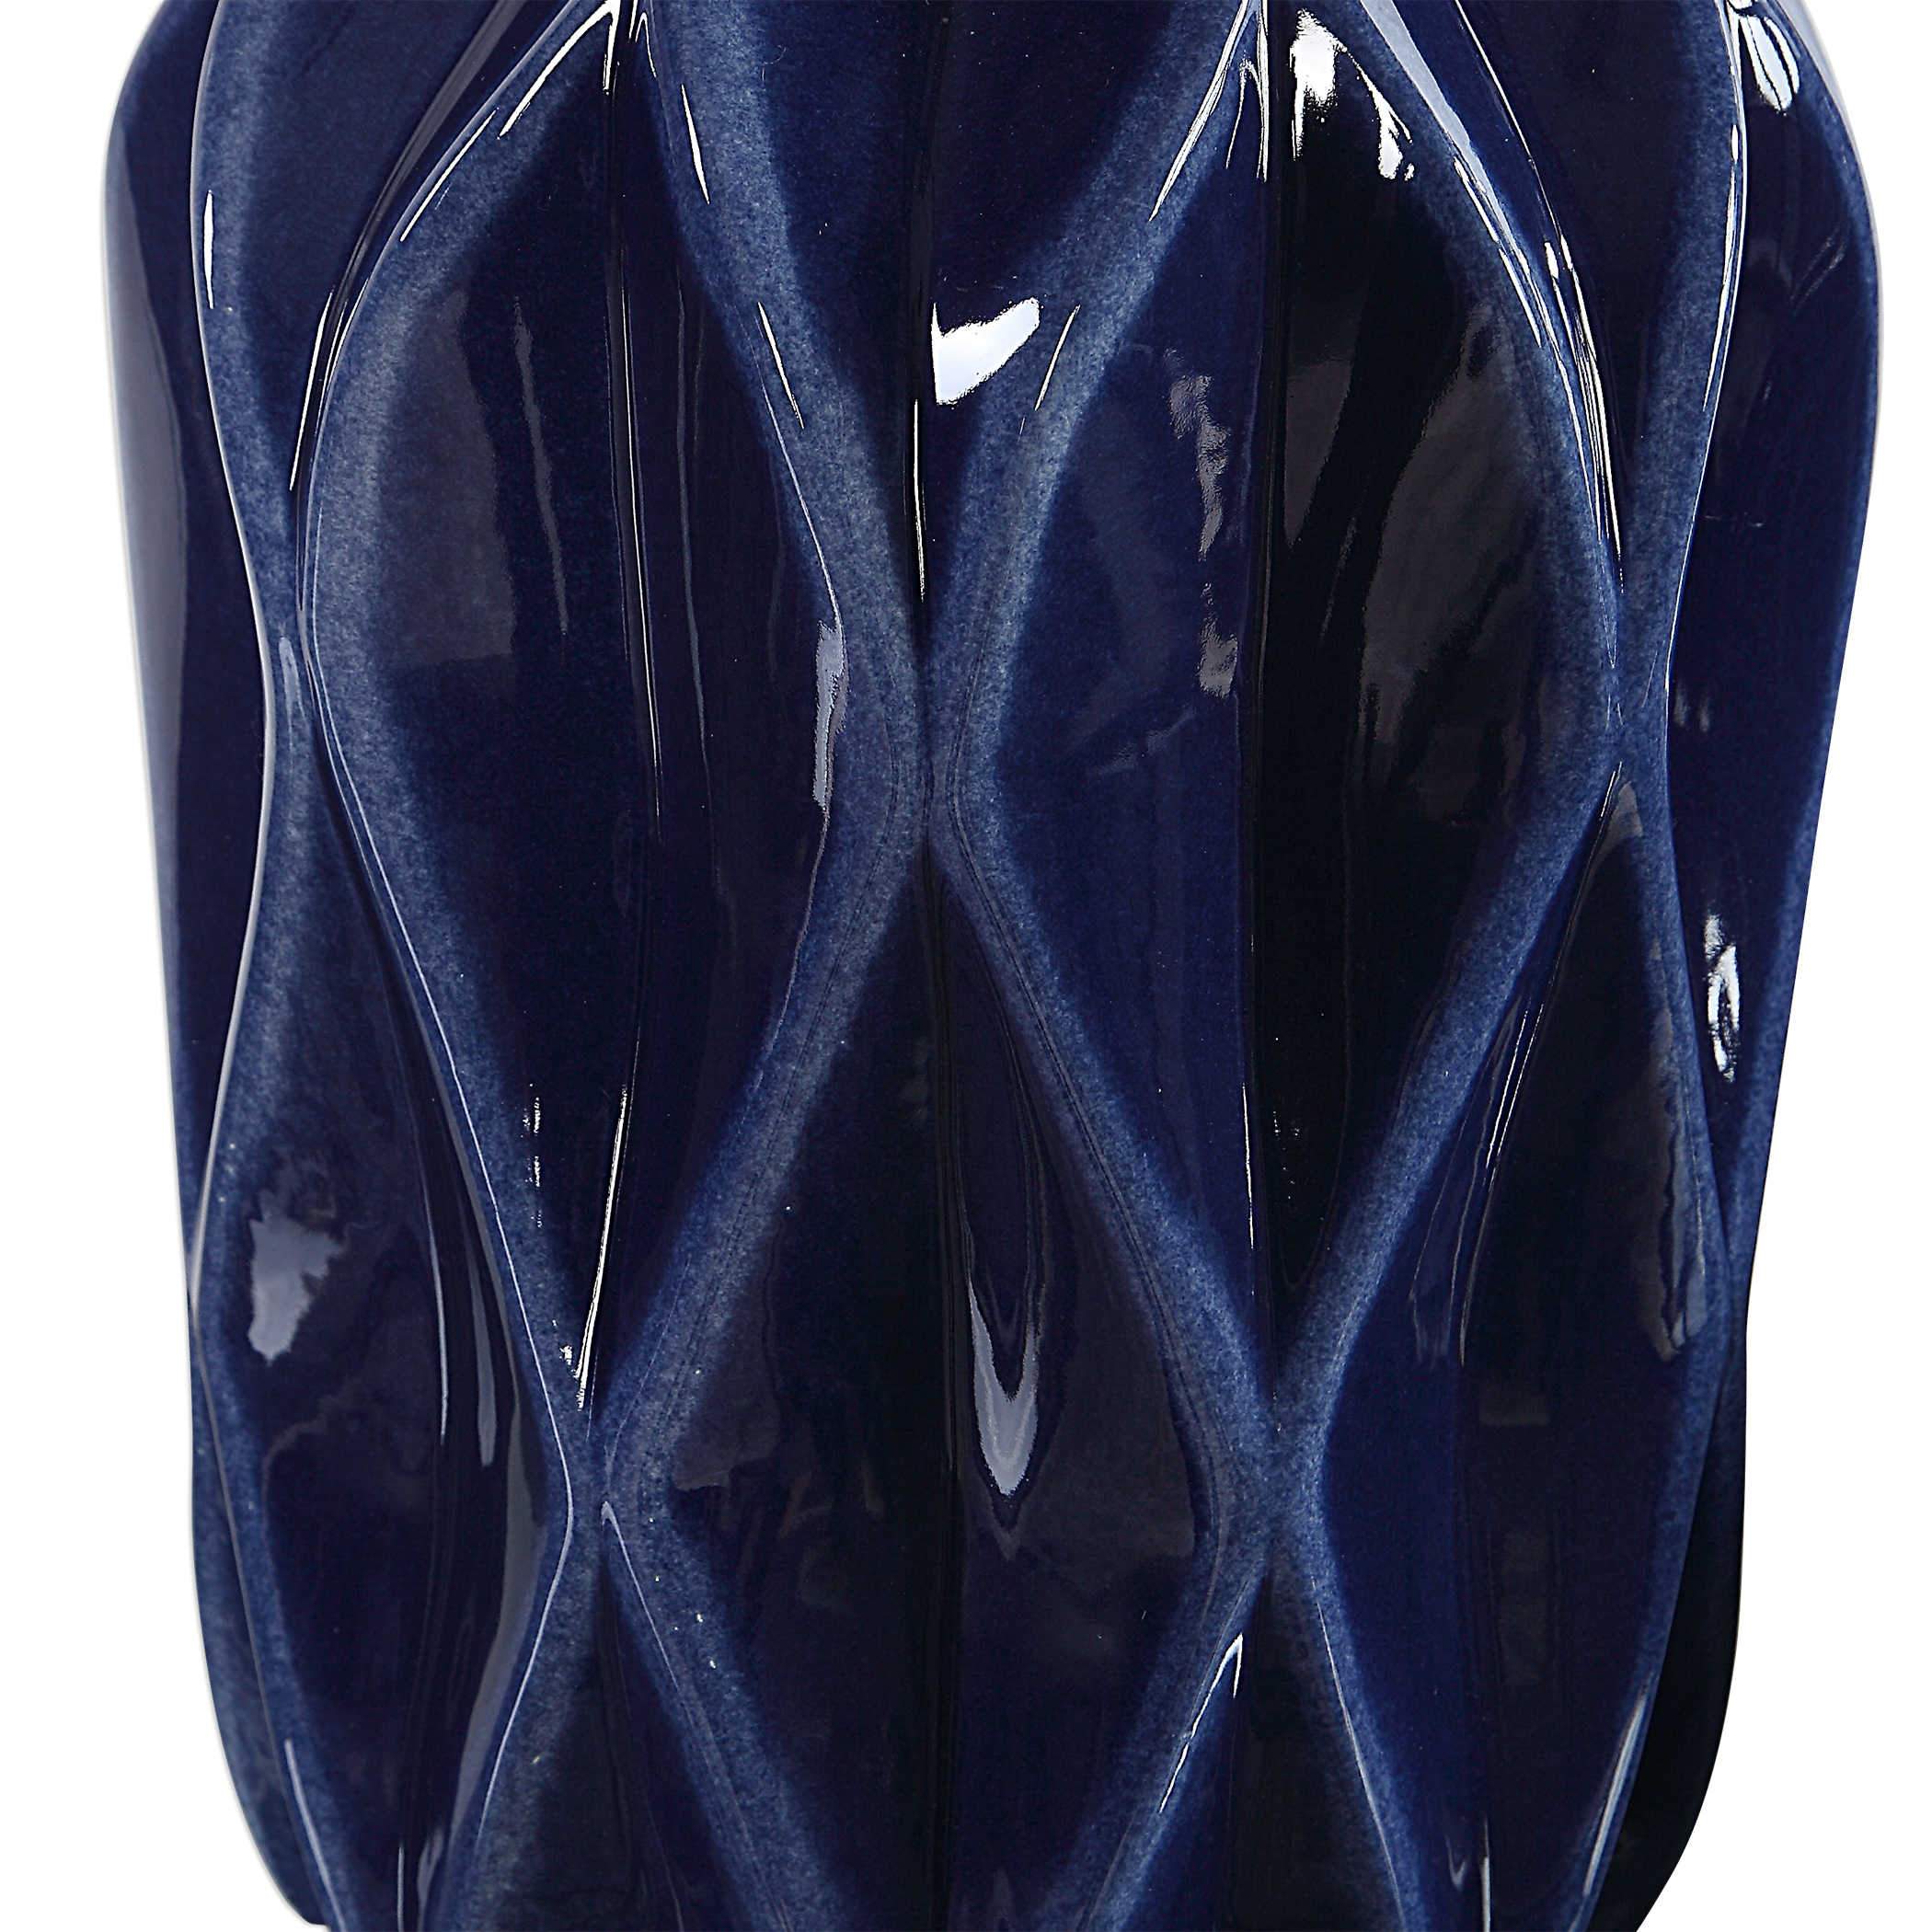 Decorative Geometric Klaran Bottles Uttermost